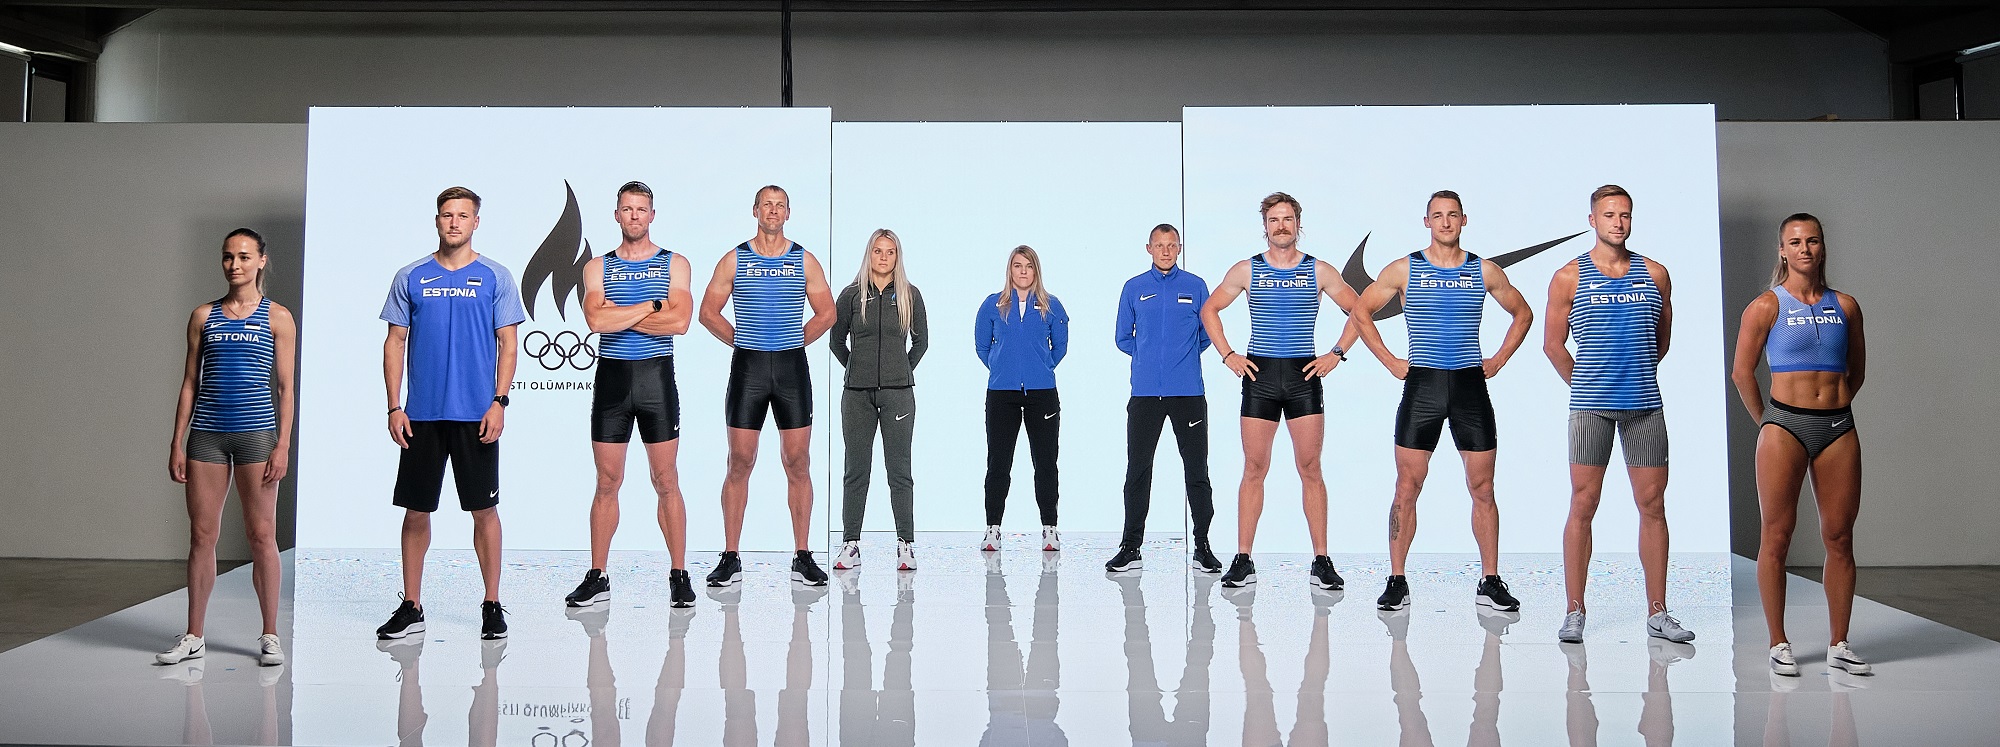 eb Allerlei soorten voedsel NOC Estonia unveils competition apparel for Estonian athletes to wear at  Tokyo 2020 : ANOC